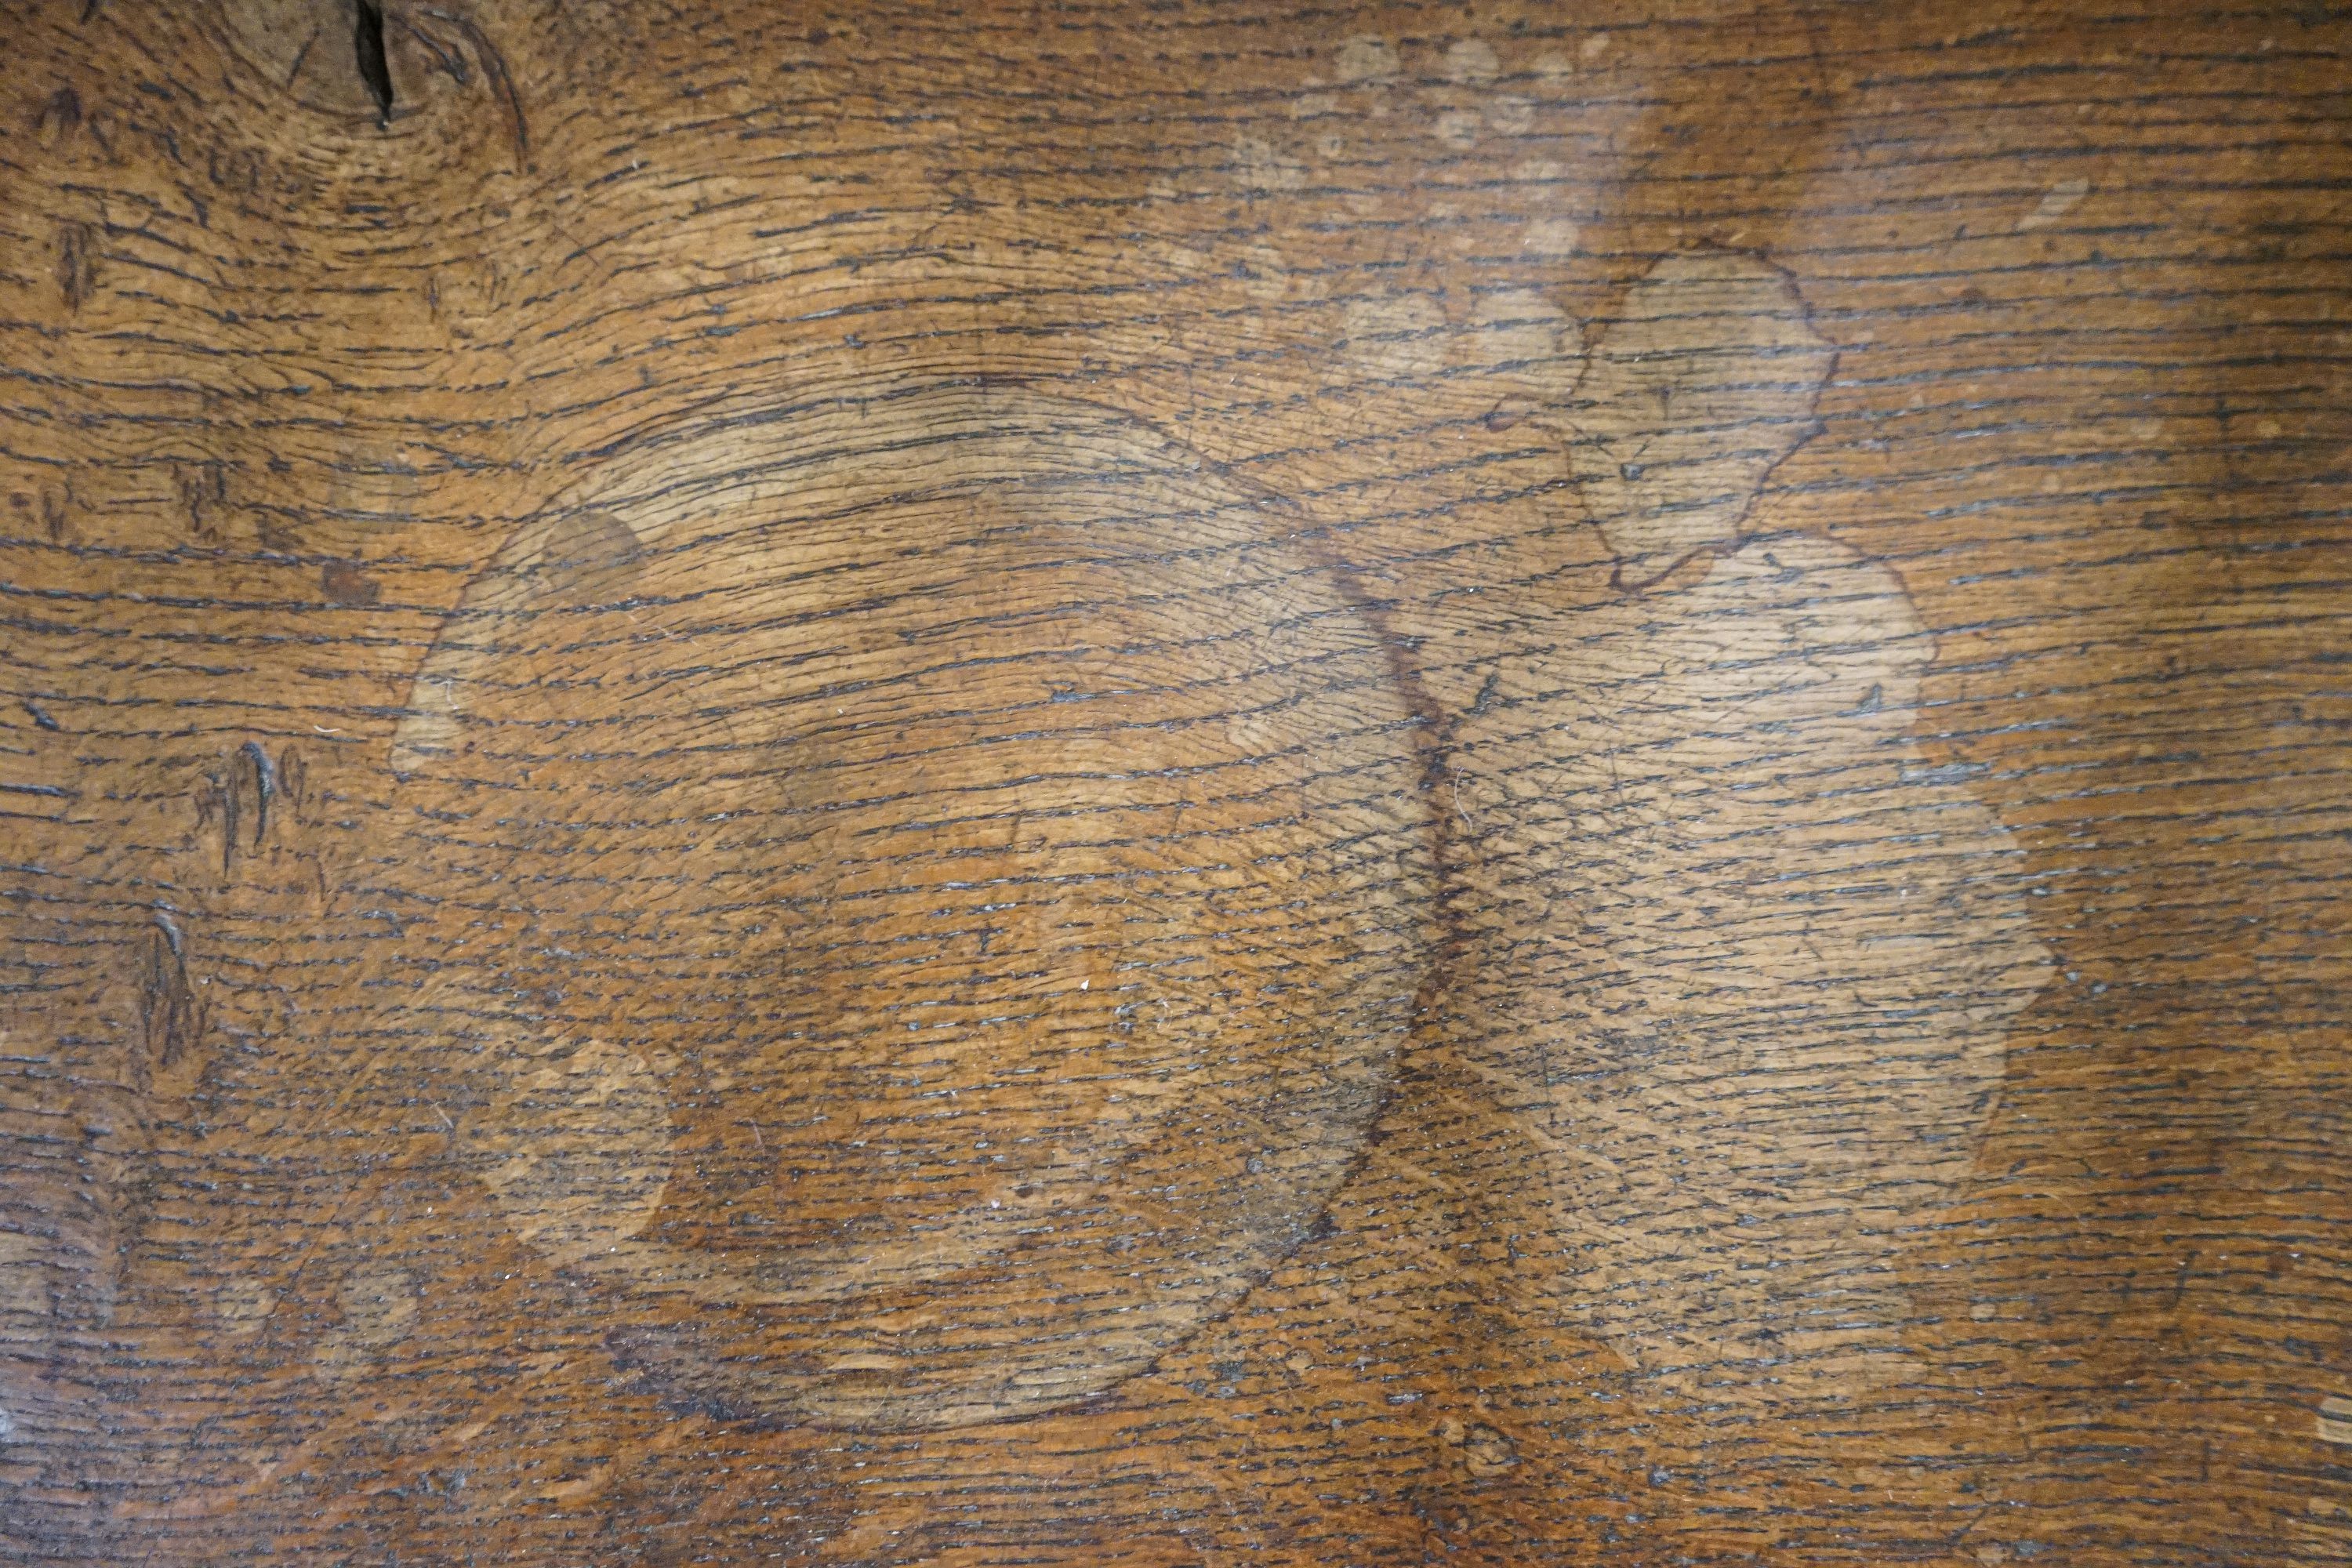 A late 18th century oak chair back settle, width 91cm, depth 38cm, height 85cm